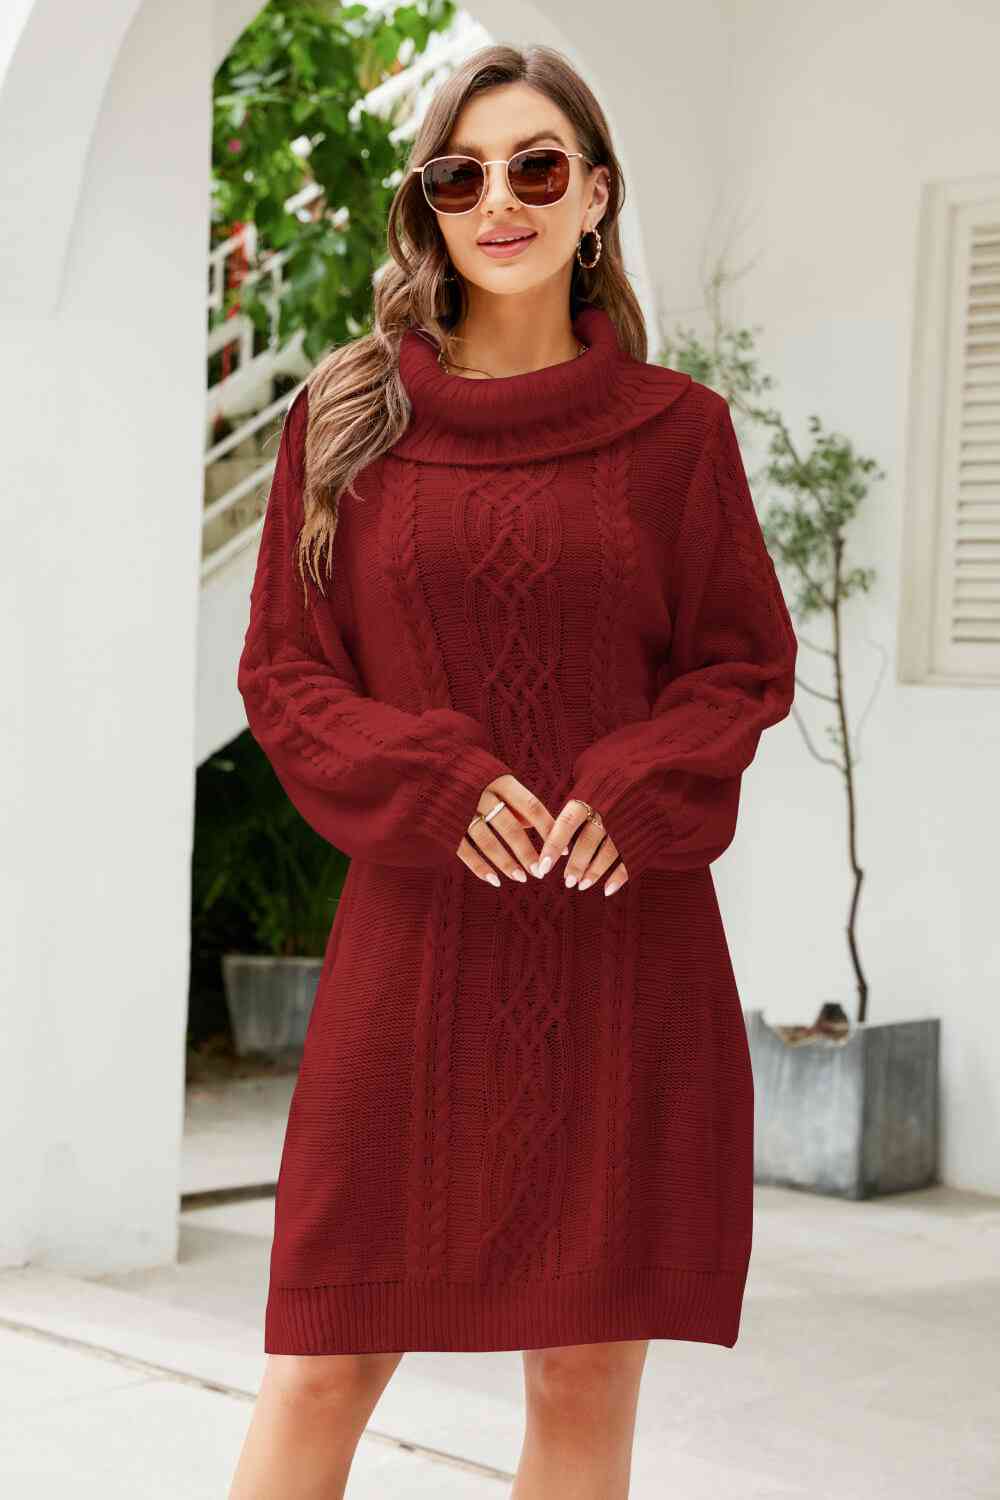 Woven Right Mixed Knit Turtleneck Lantern Sleeve Sweater Dress Wine